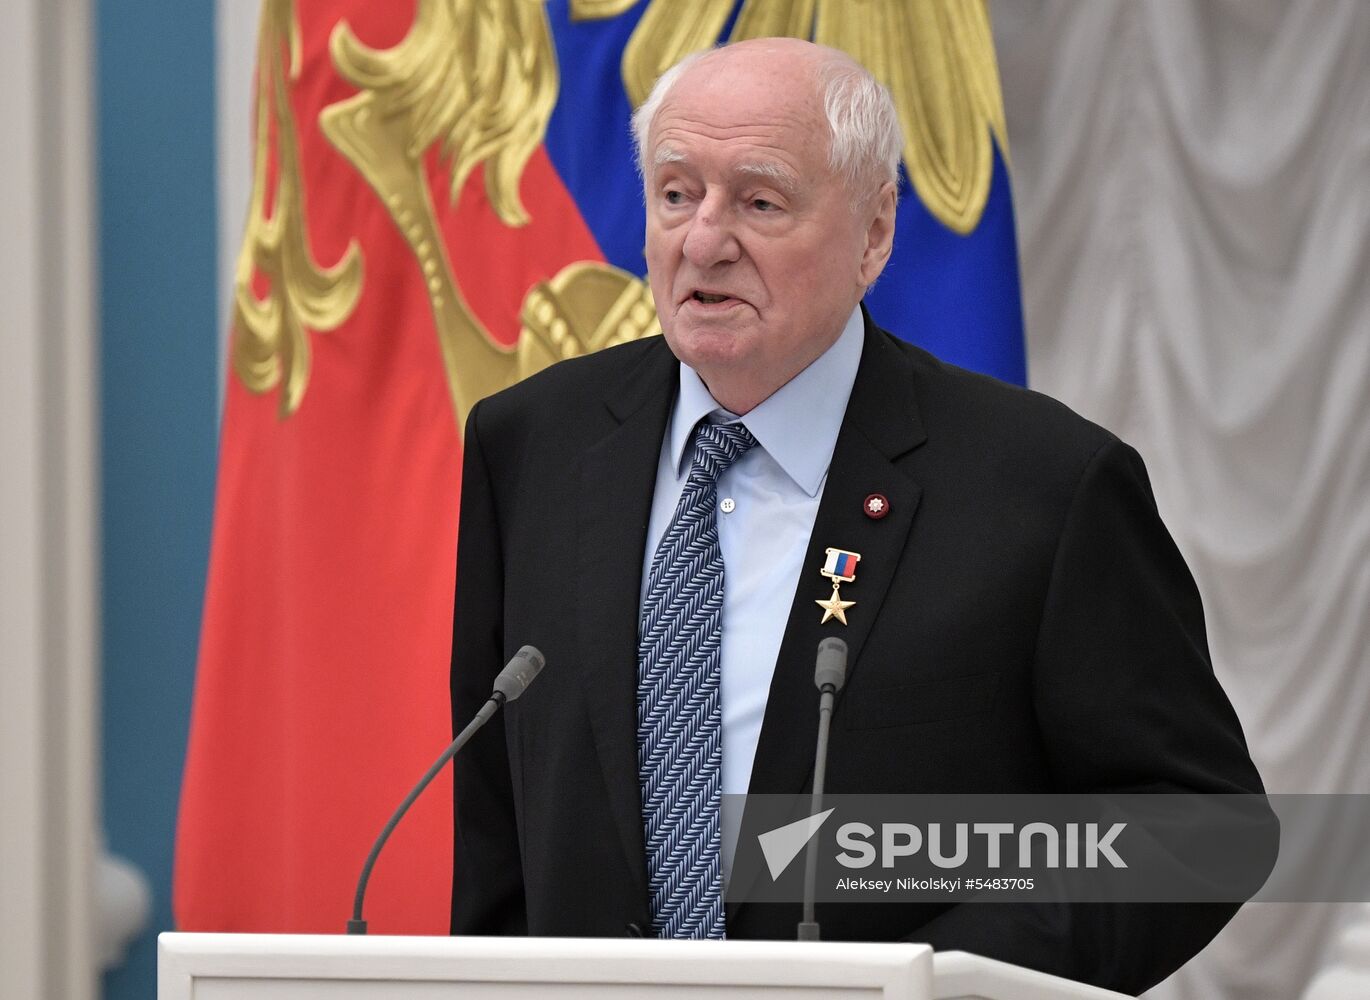 Russian President Vladimir Putin presents Hero of Labor of Russian Federation medals